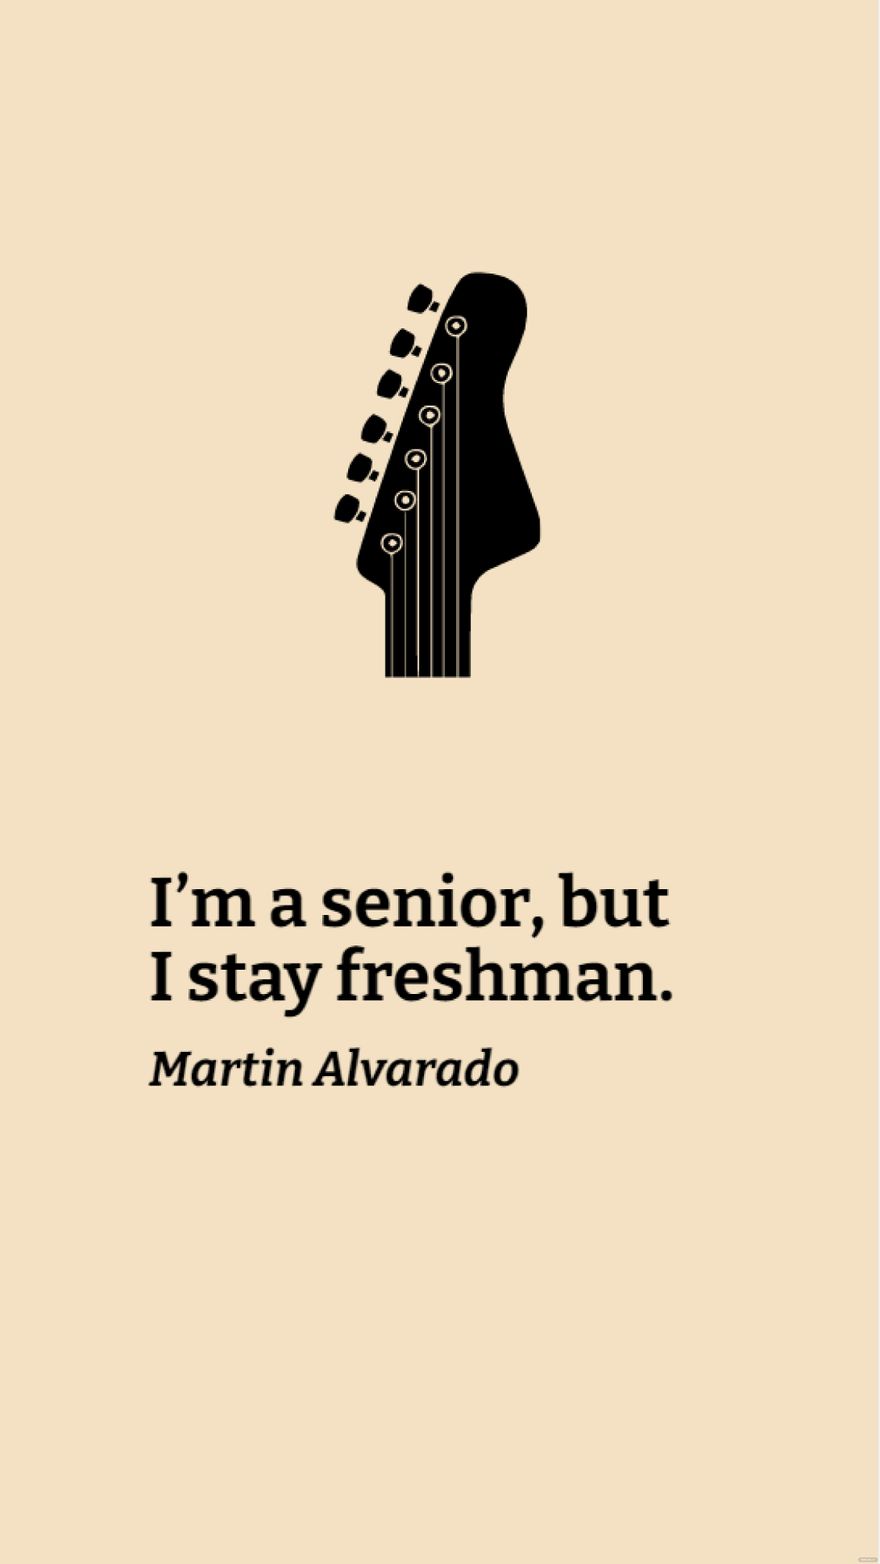 Martin Alvarado - I’m a senior, but I stay freshman.